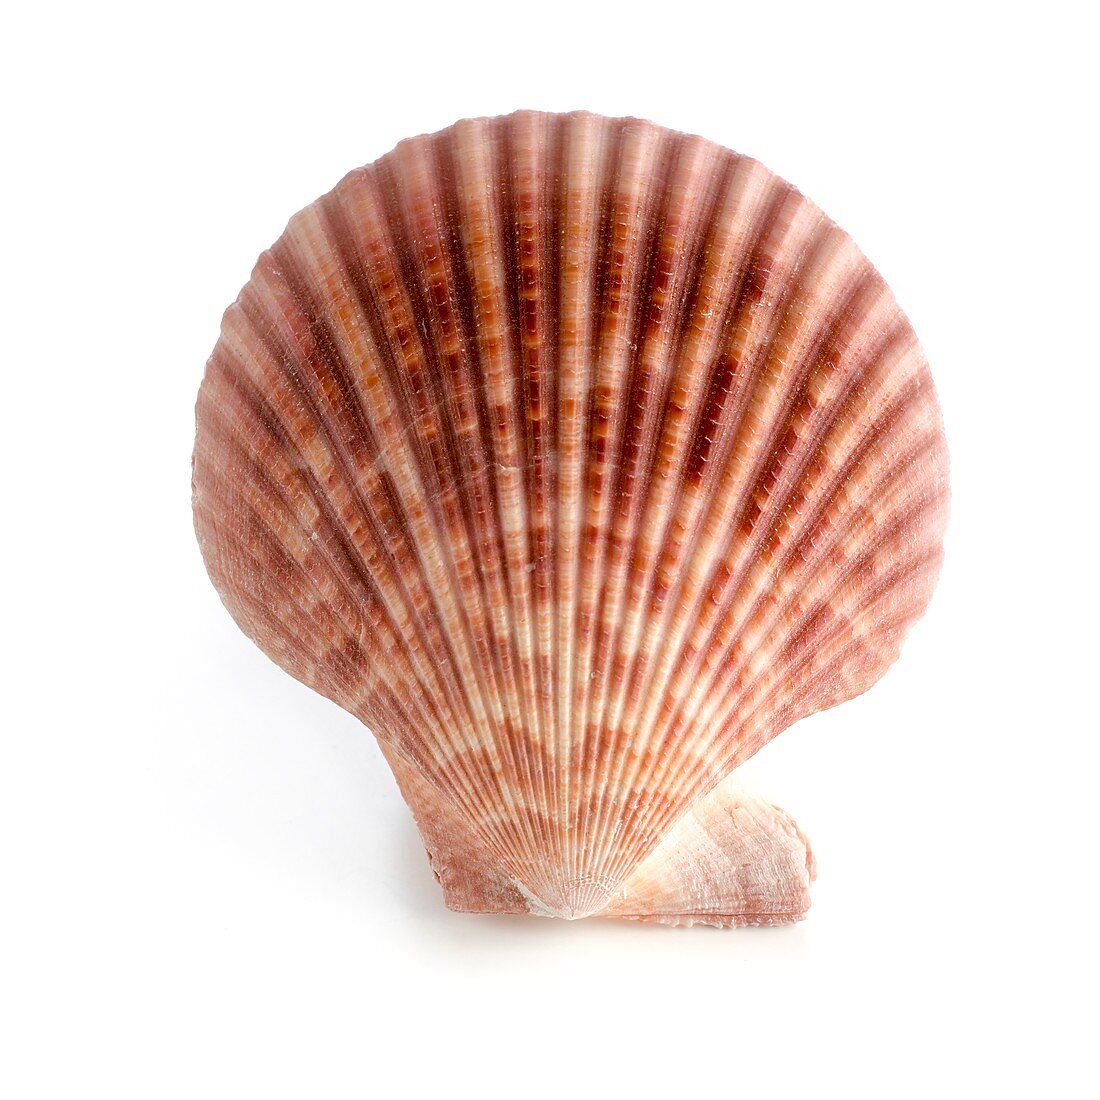 Scallop shell